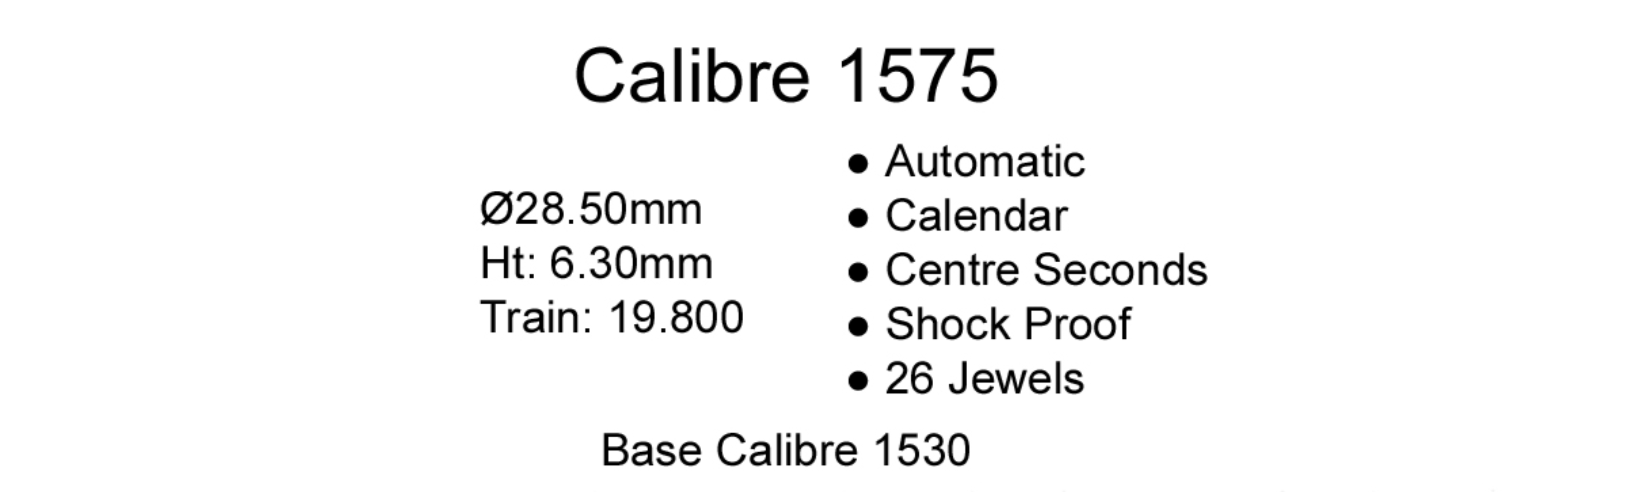 rolex caliber 1575